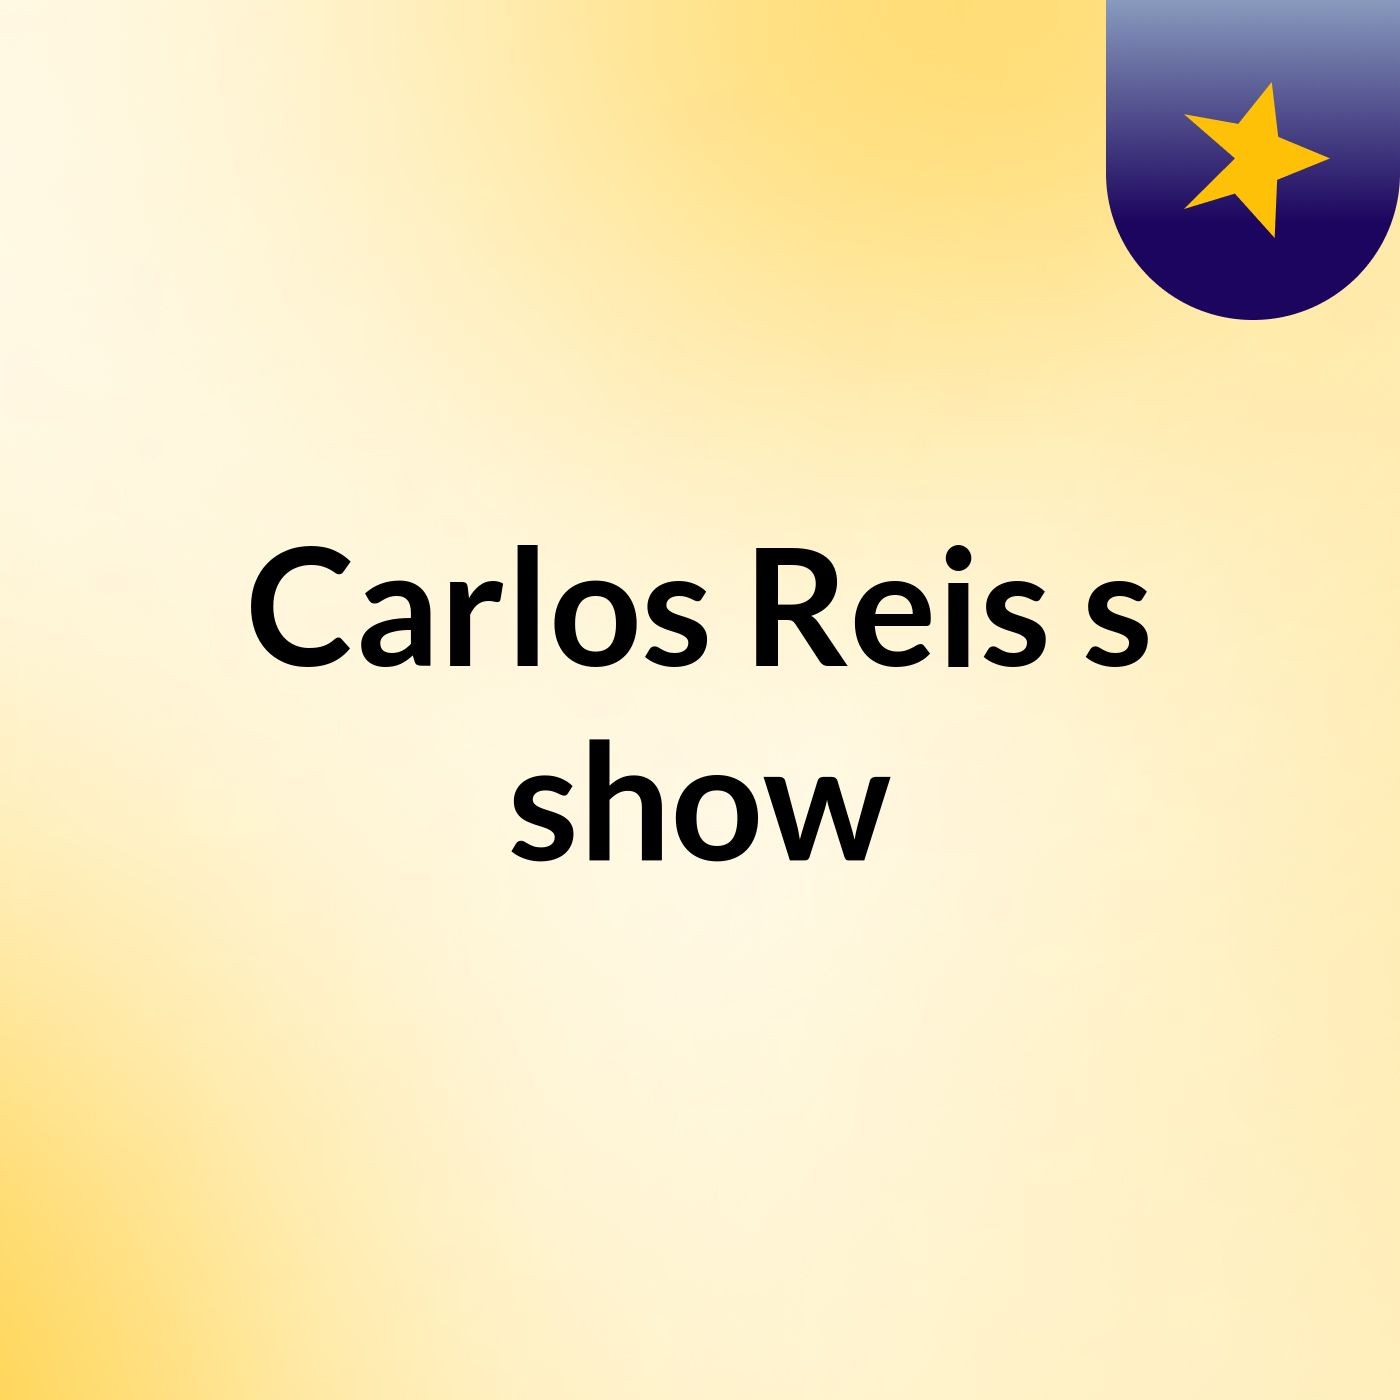 Carlos Reis's show